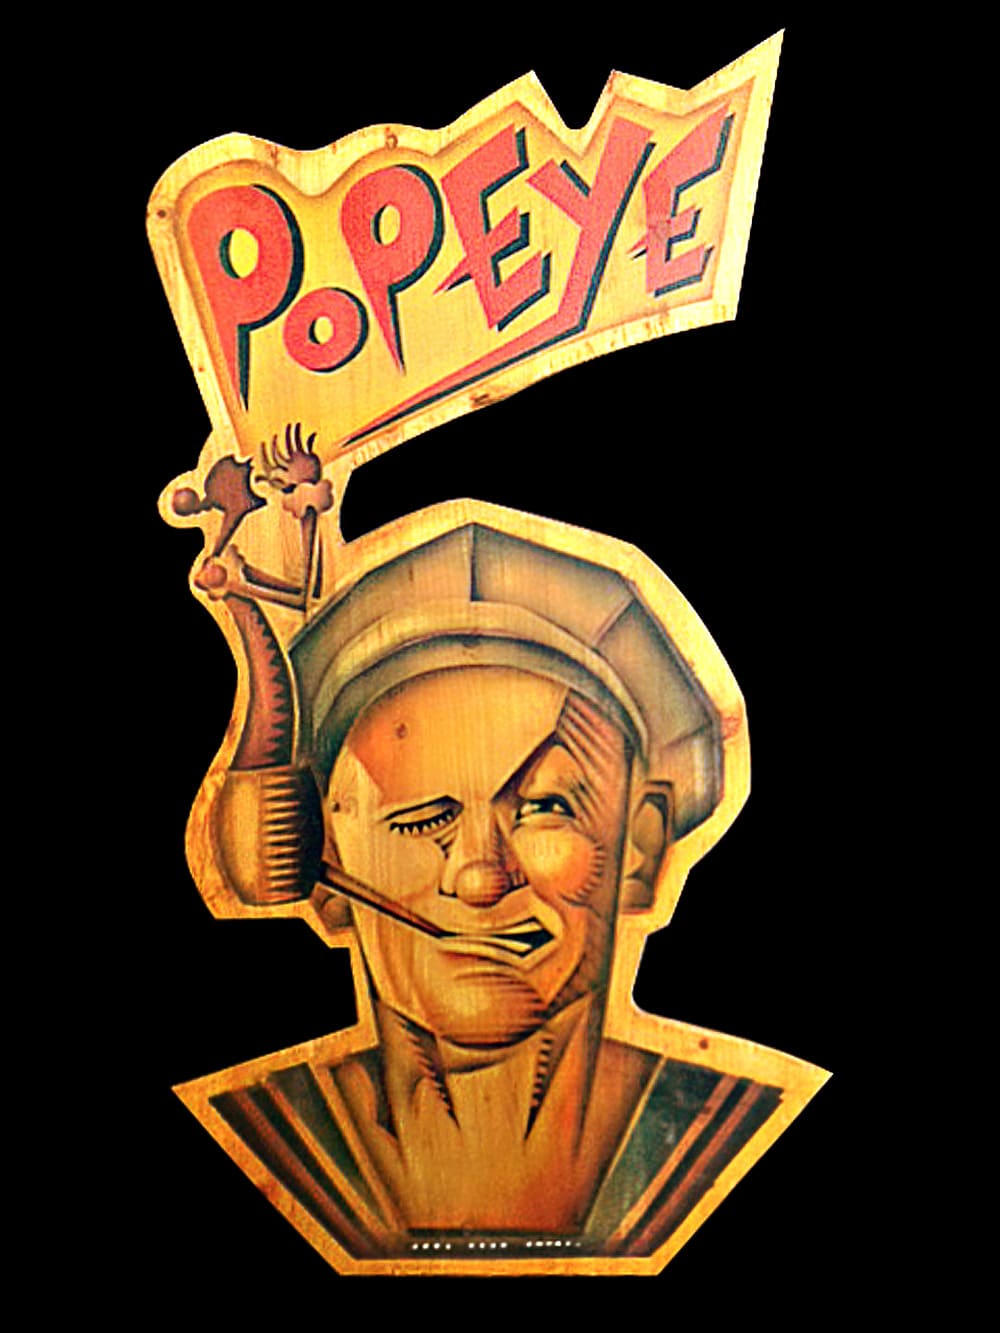 Popeye Tribute Art Show Print 6